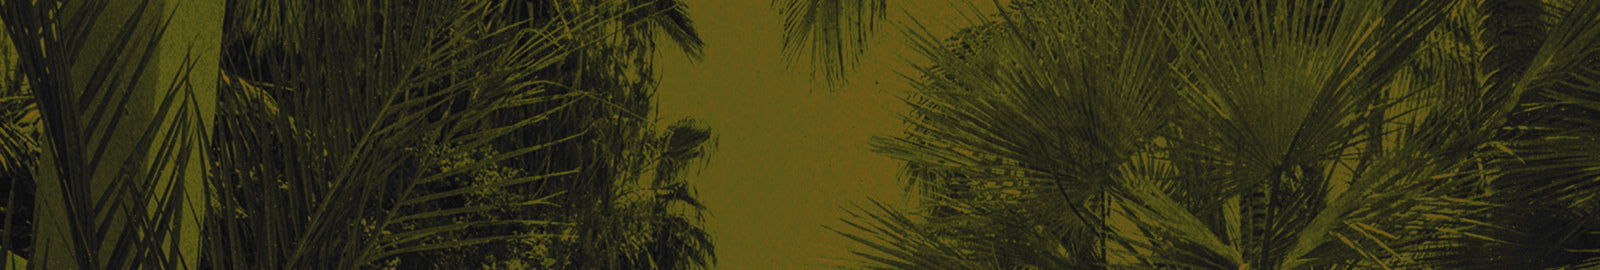 palm tree background